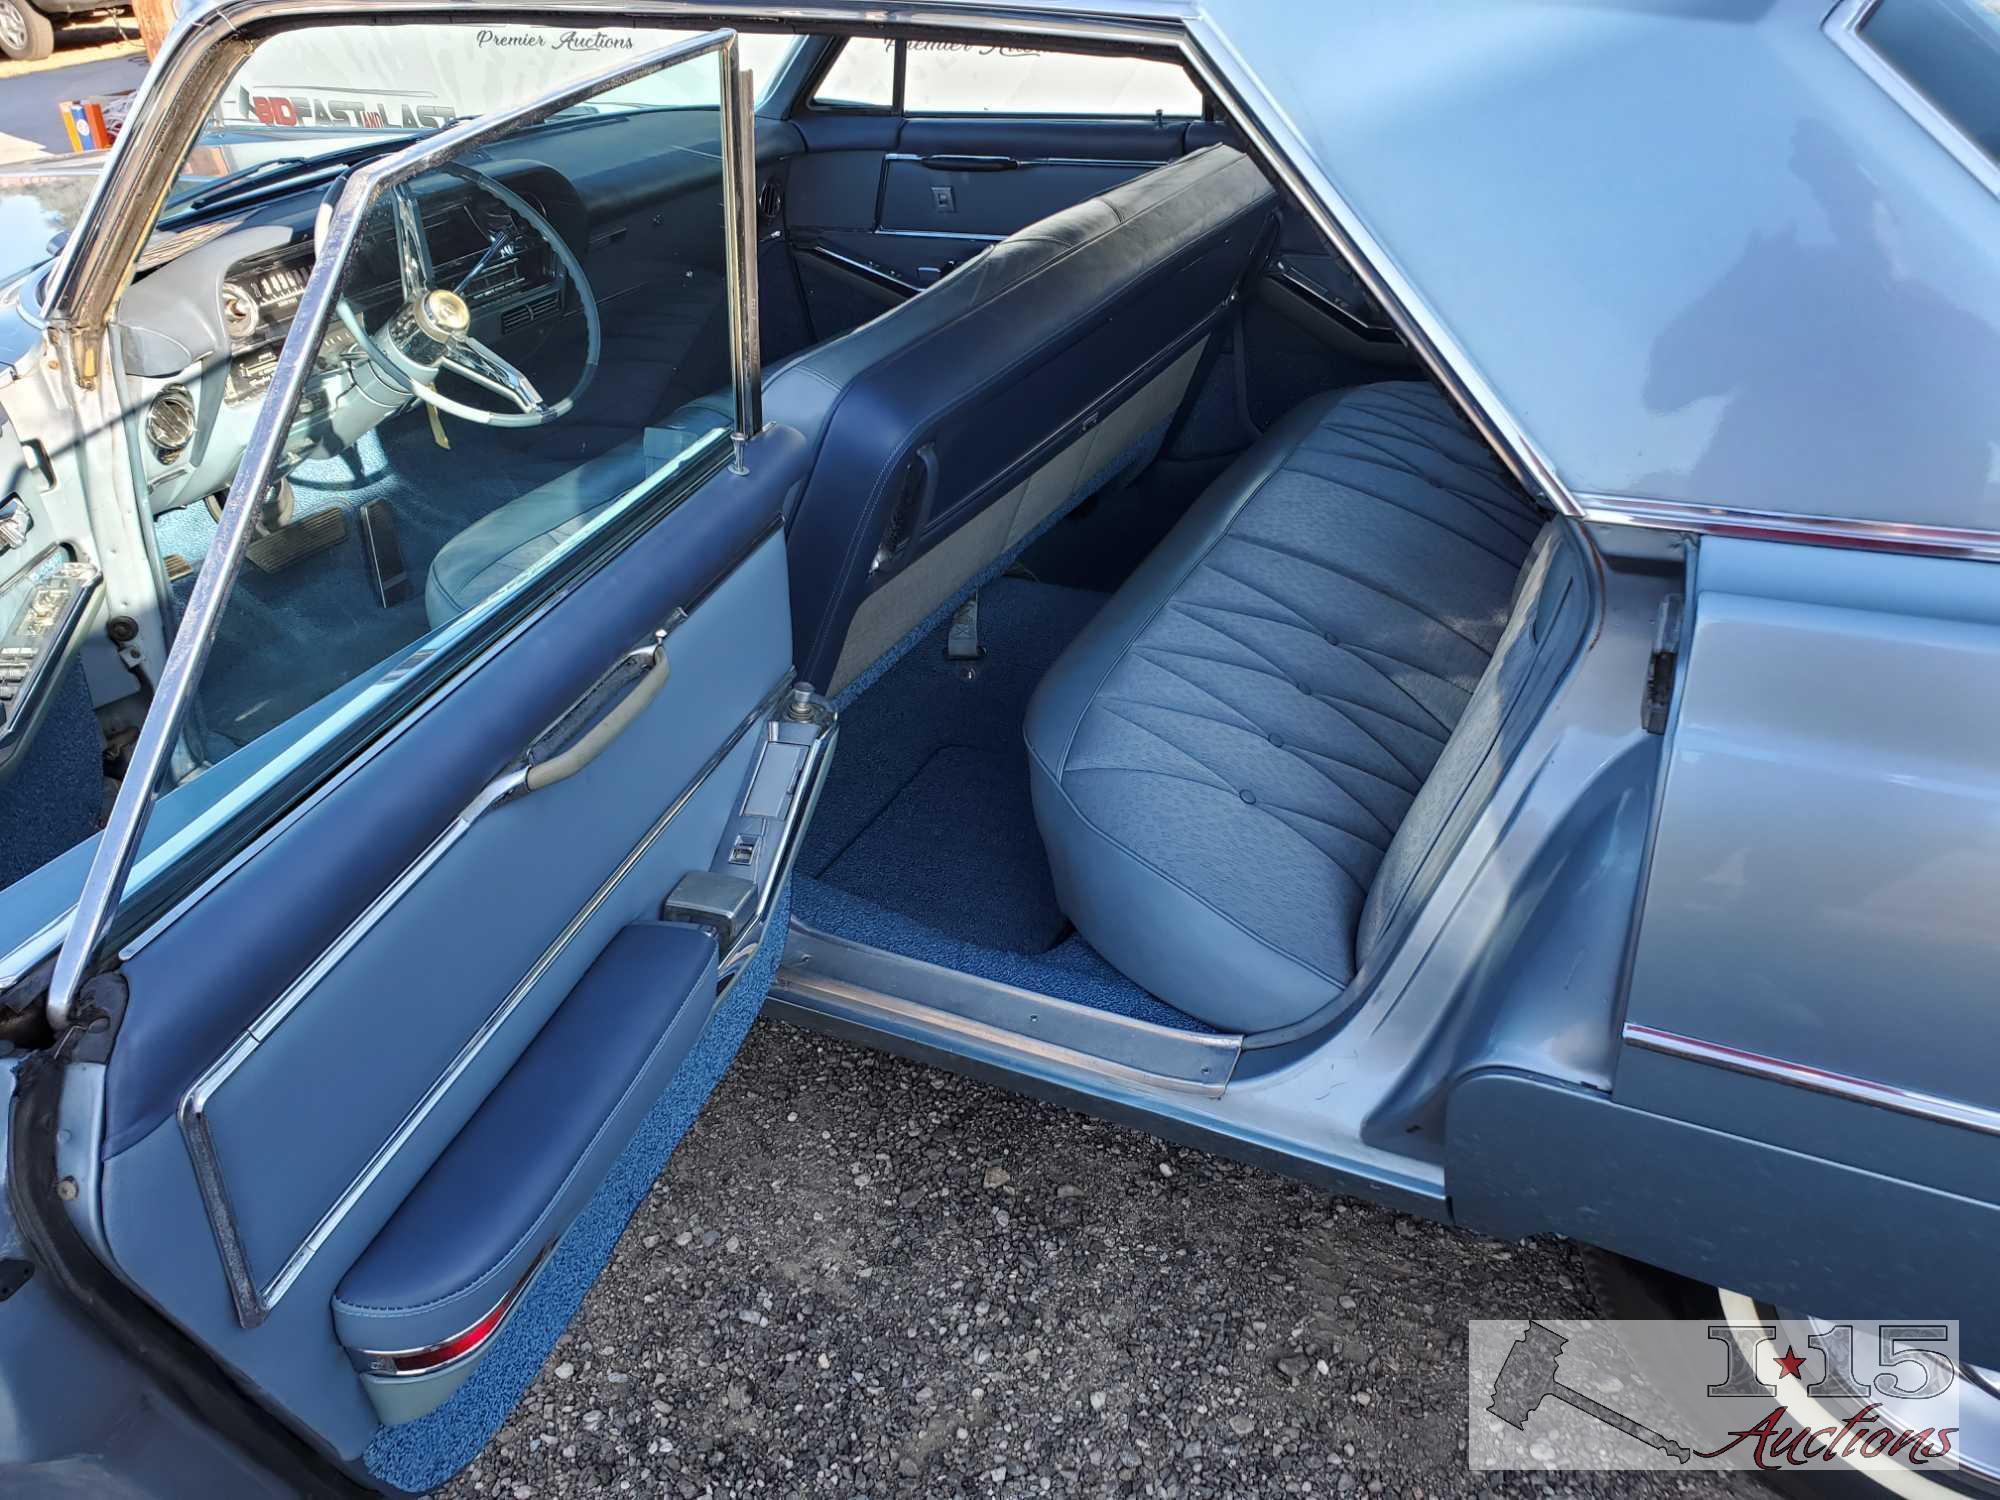 1964 Cadillac Sedan DeVille, Blue